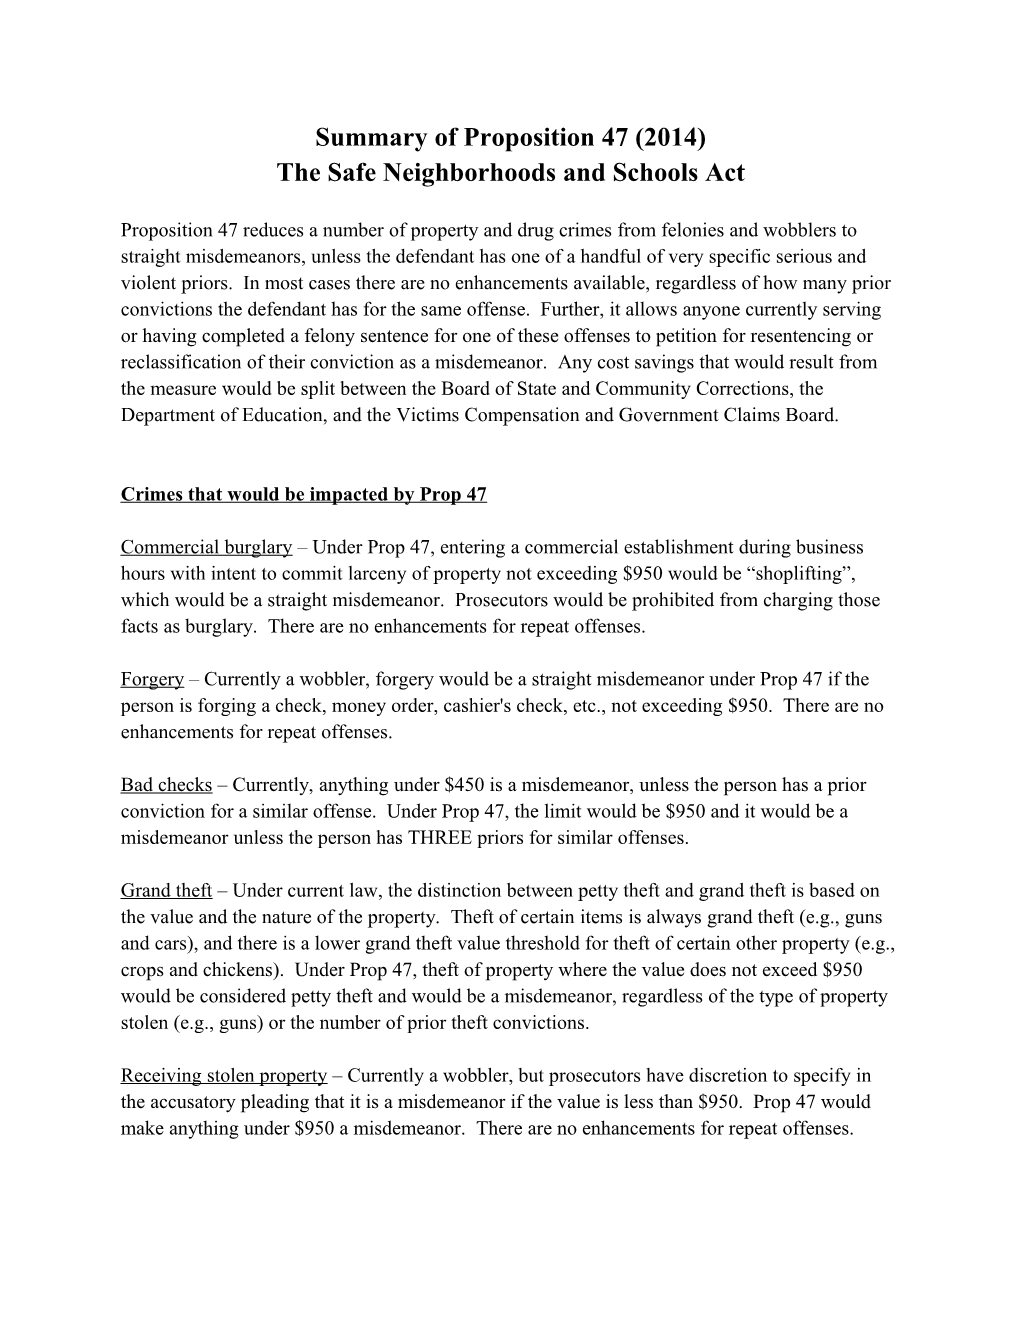 The Safe Neighborhoods and Schools Act